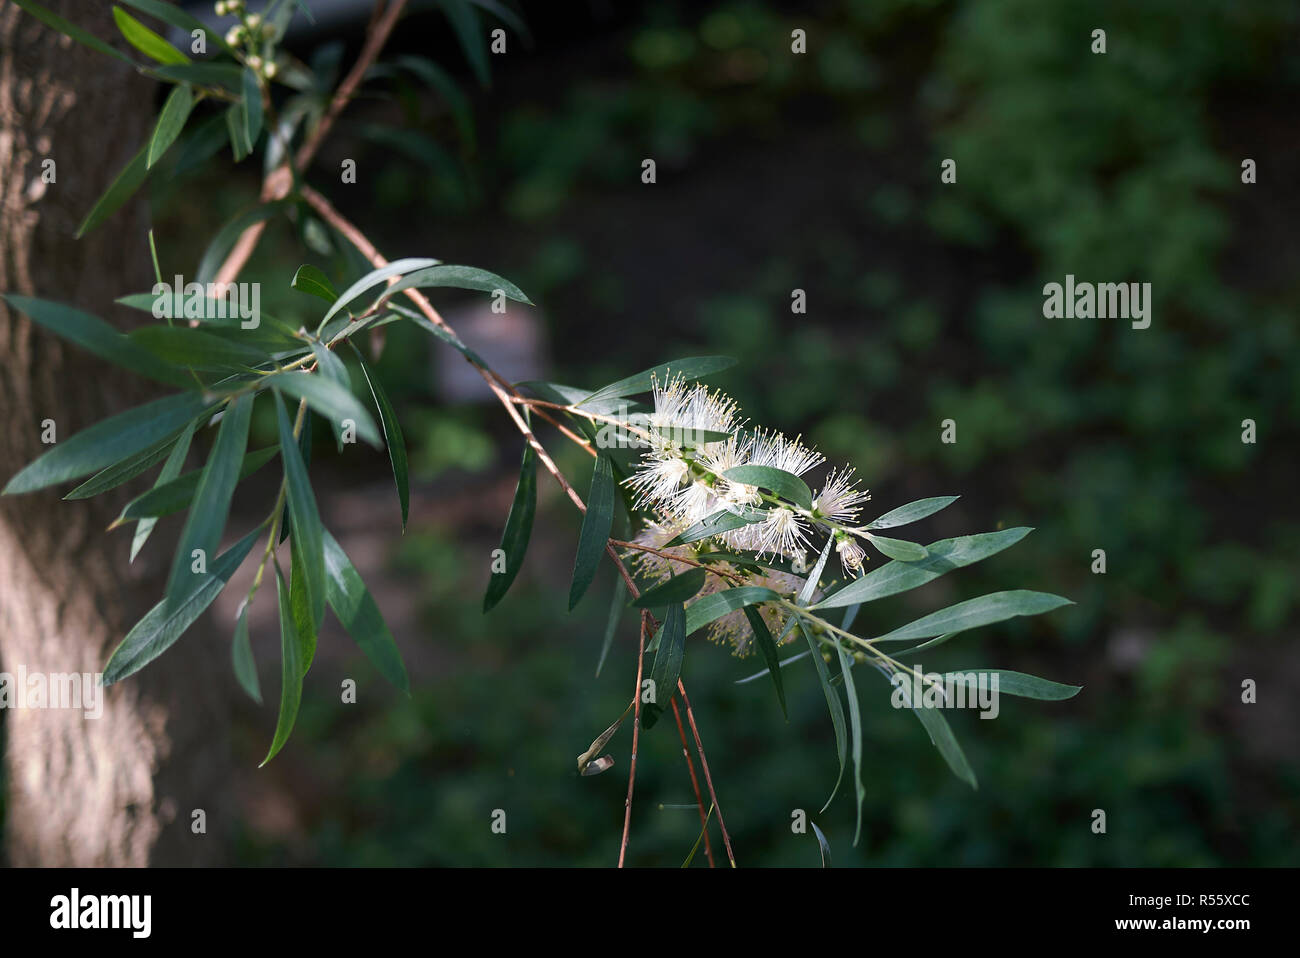 Melaleuca salicina branch with flowers Stock Photo